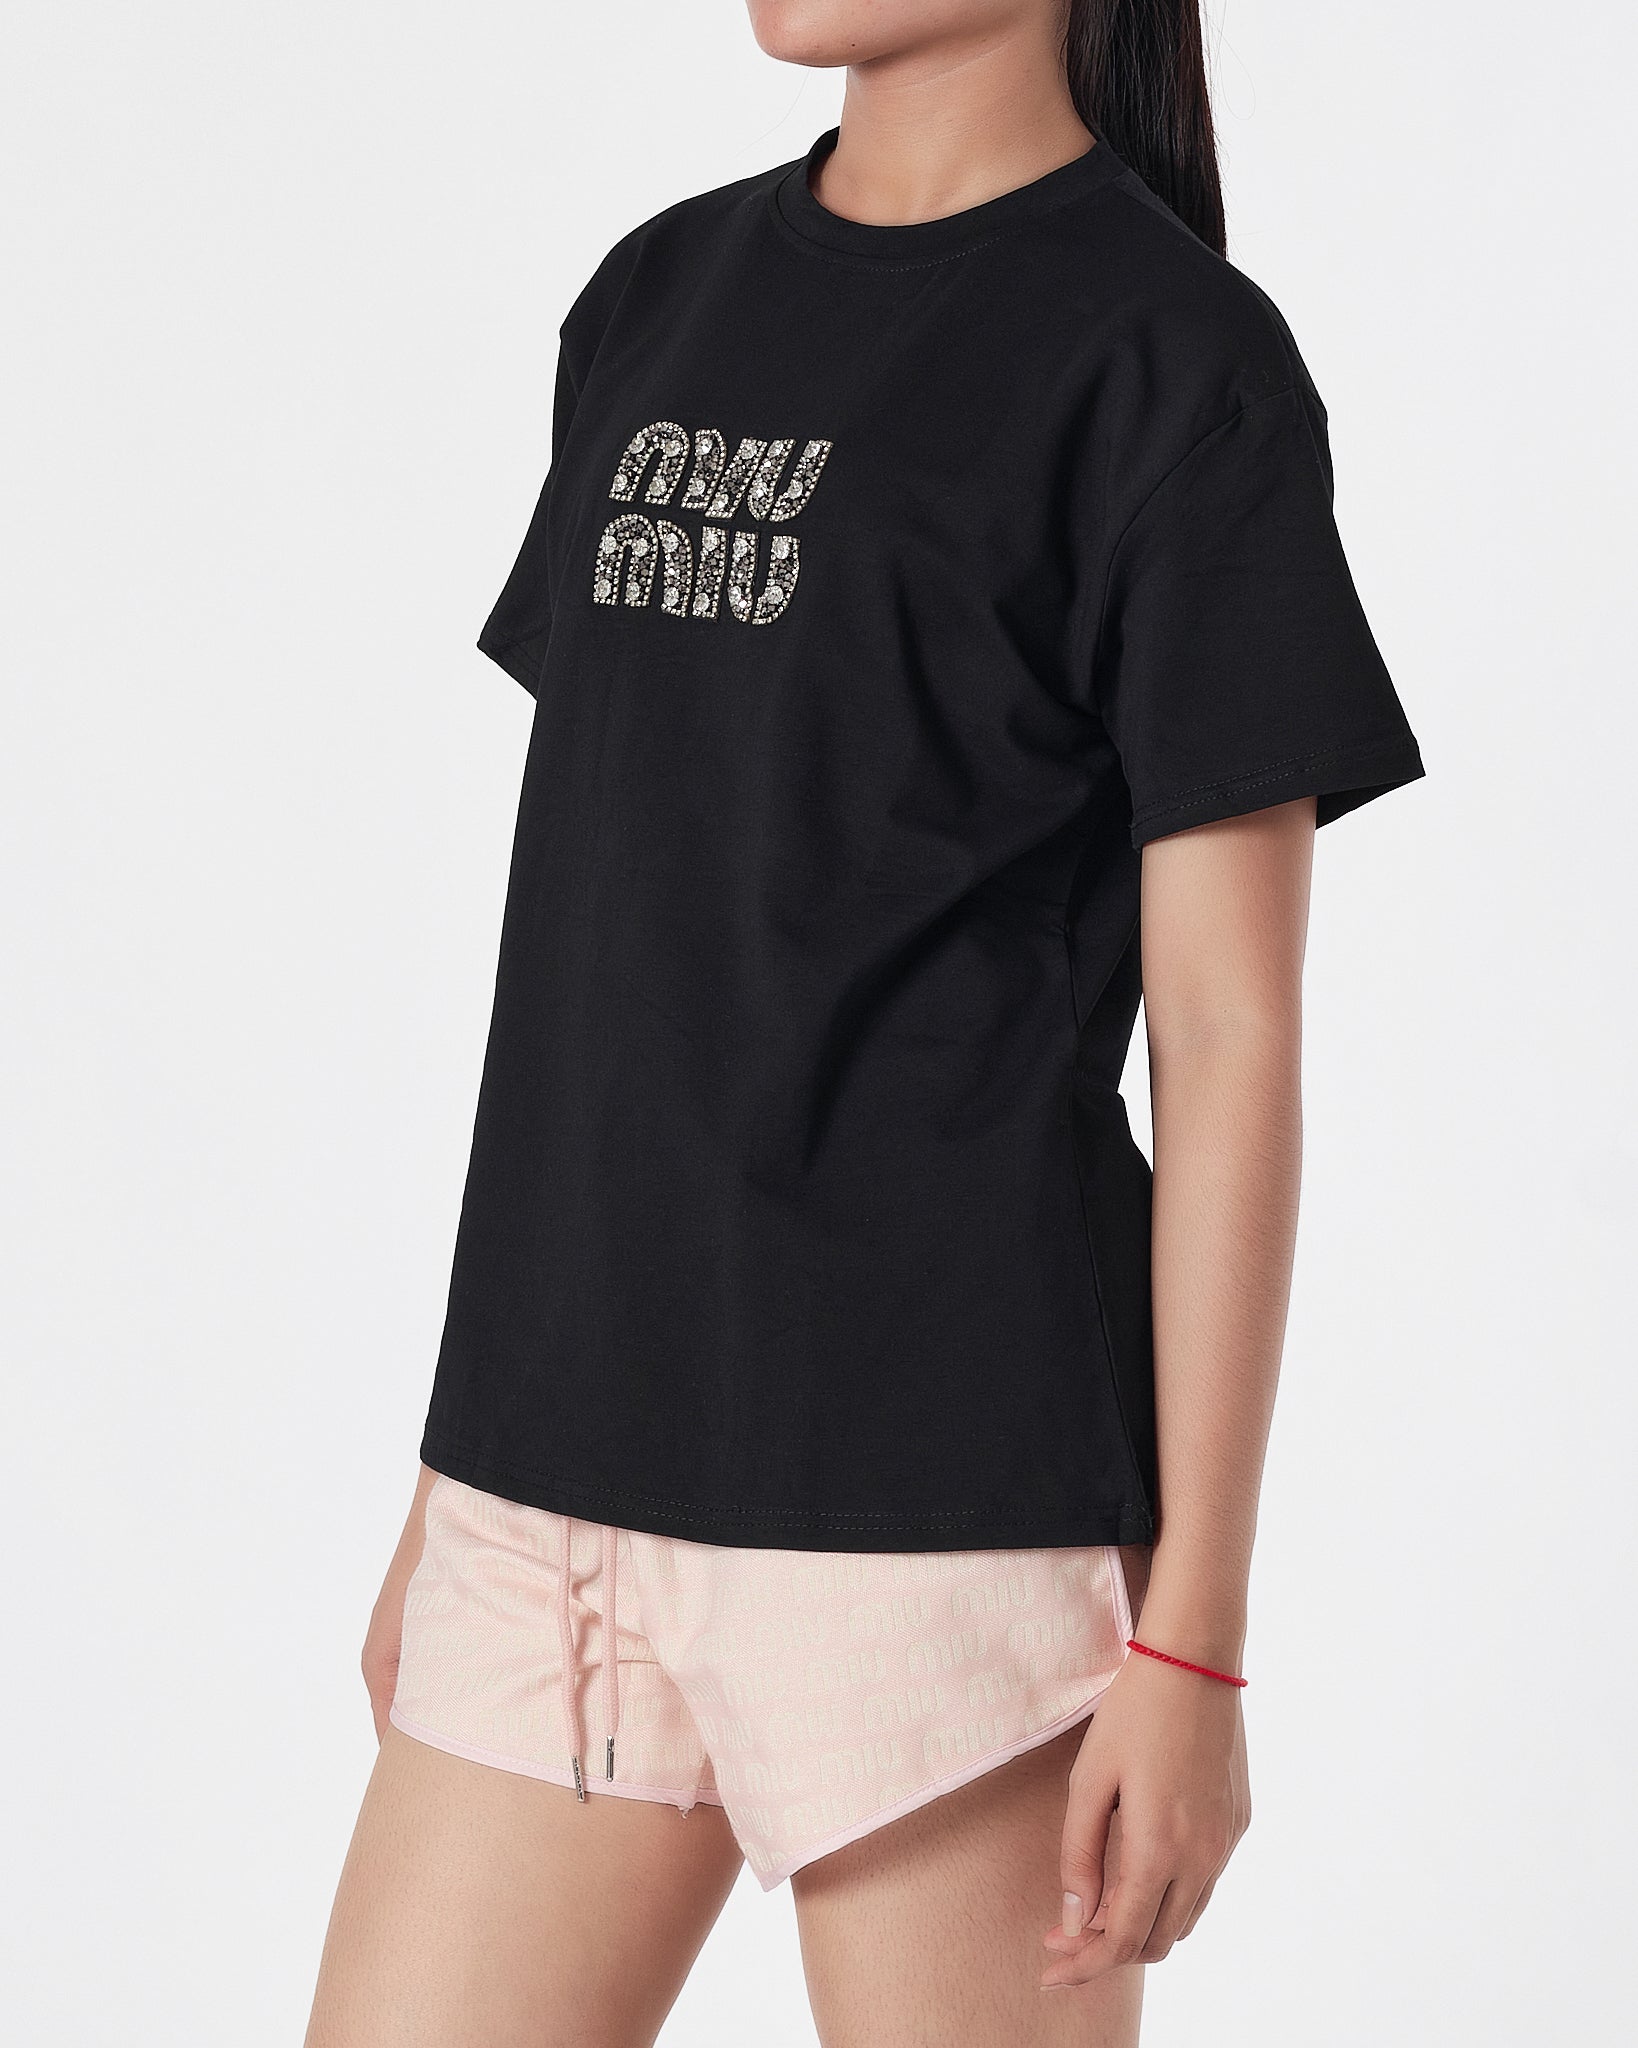 MIU MIU Lady Black T-Shirt + Shorts 2 Piece Outfit 20.90